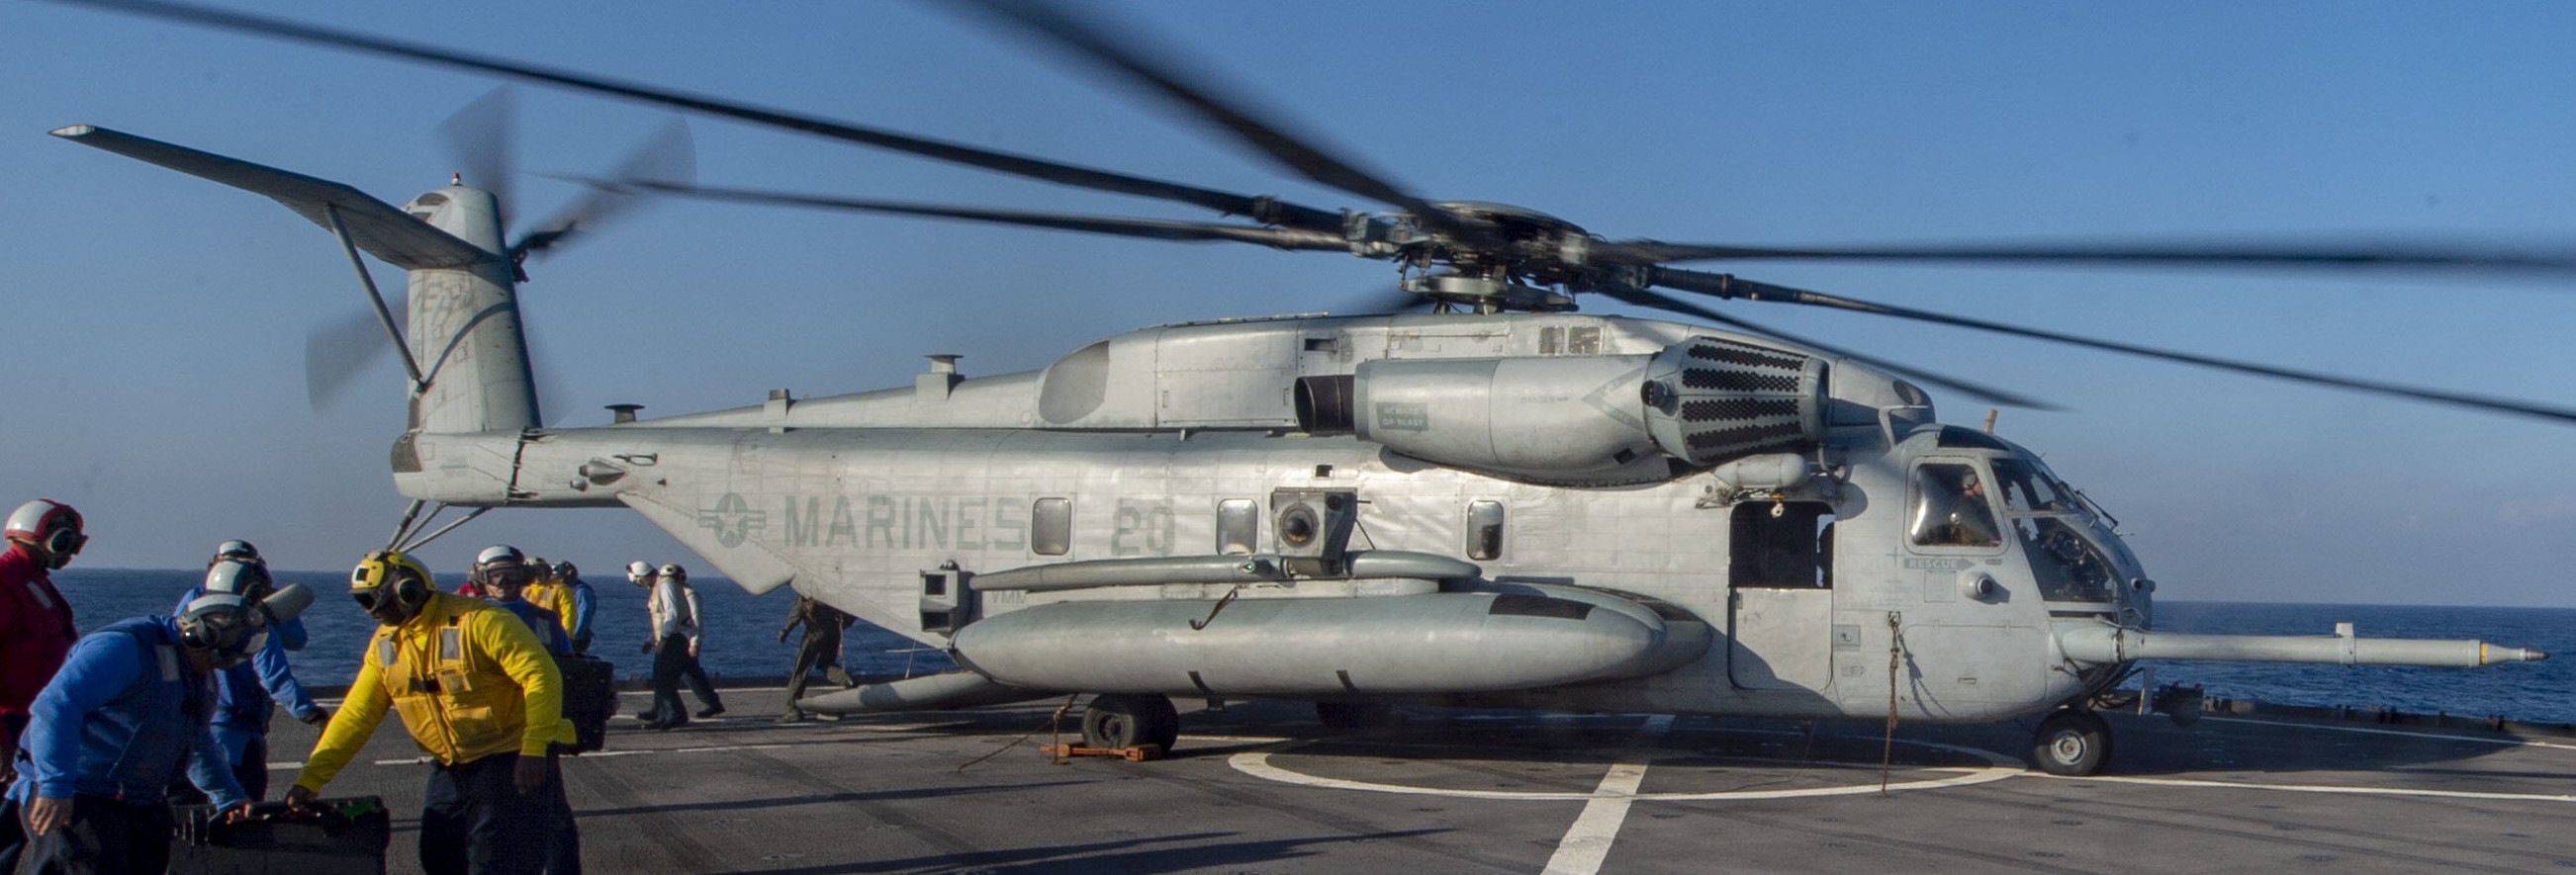 hmh-366 hammerheads ch-53e super stallion marine heavy helicopter squadron usmc 138